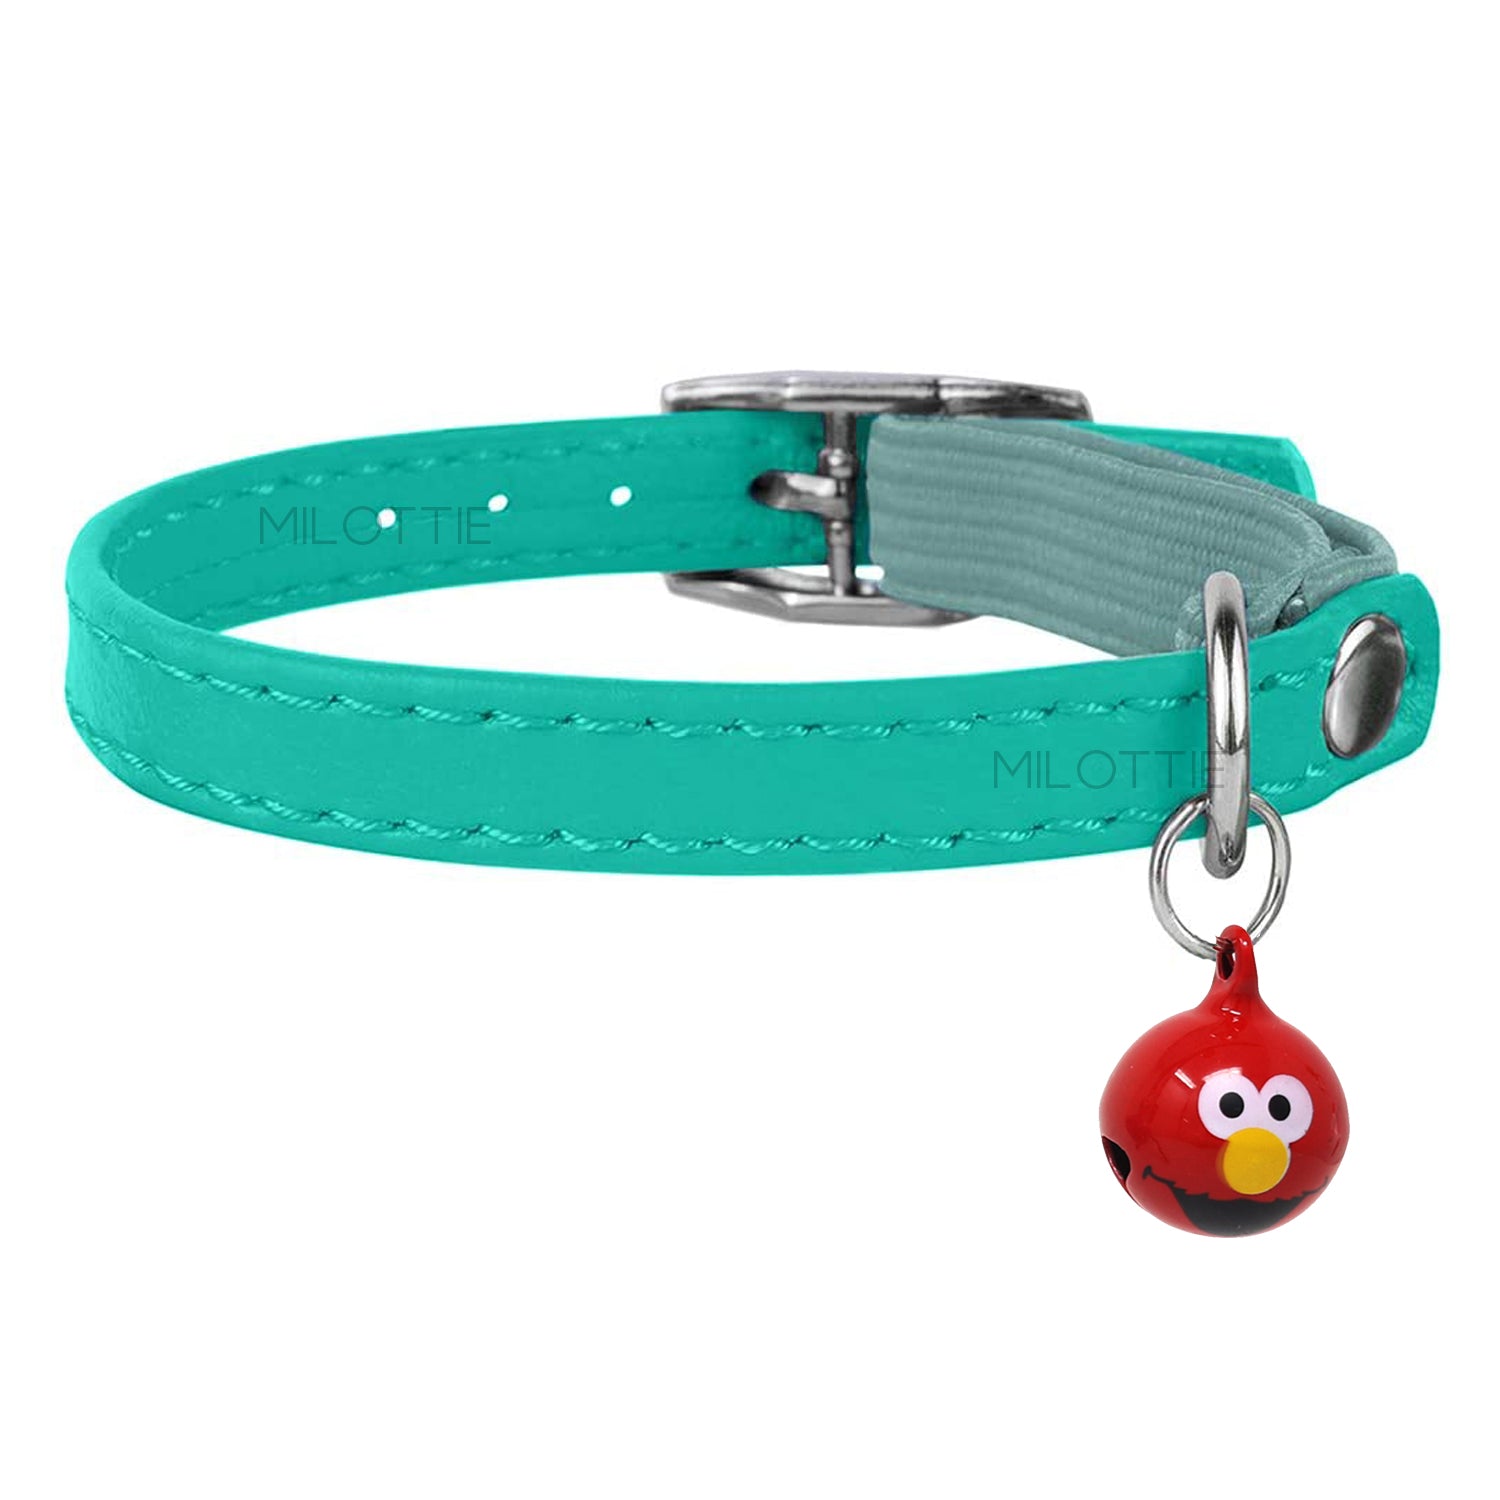 Elmo Sesame Street Collar Bell